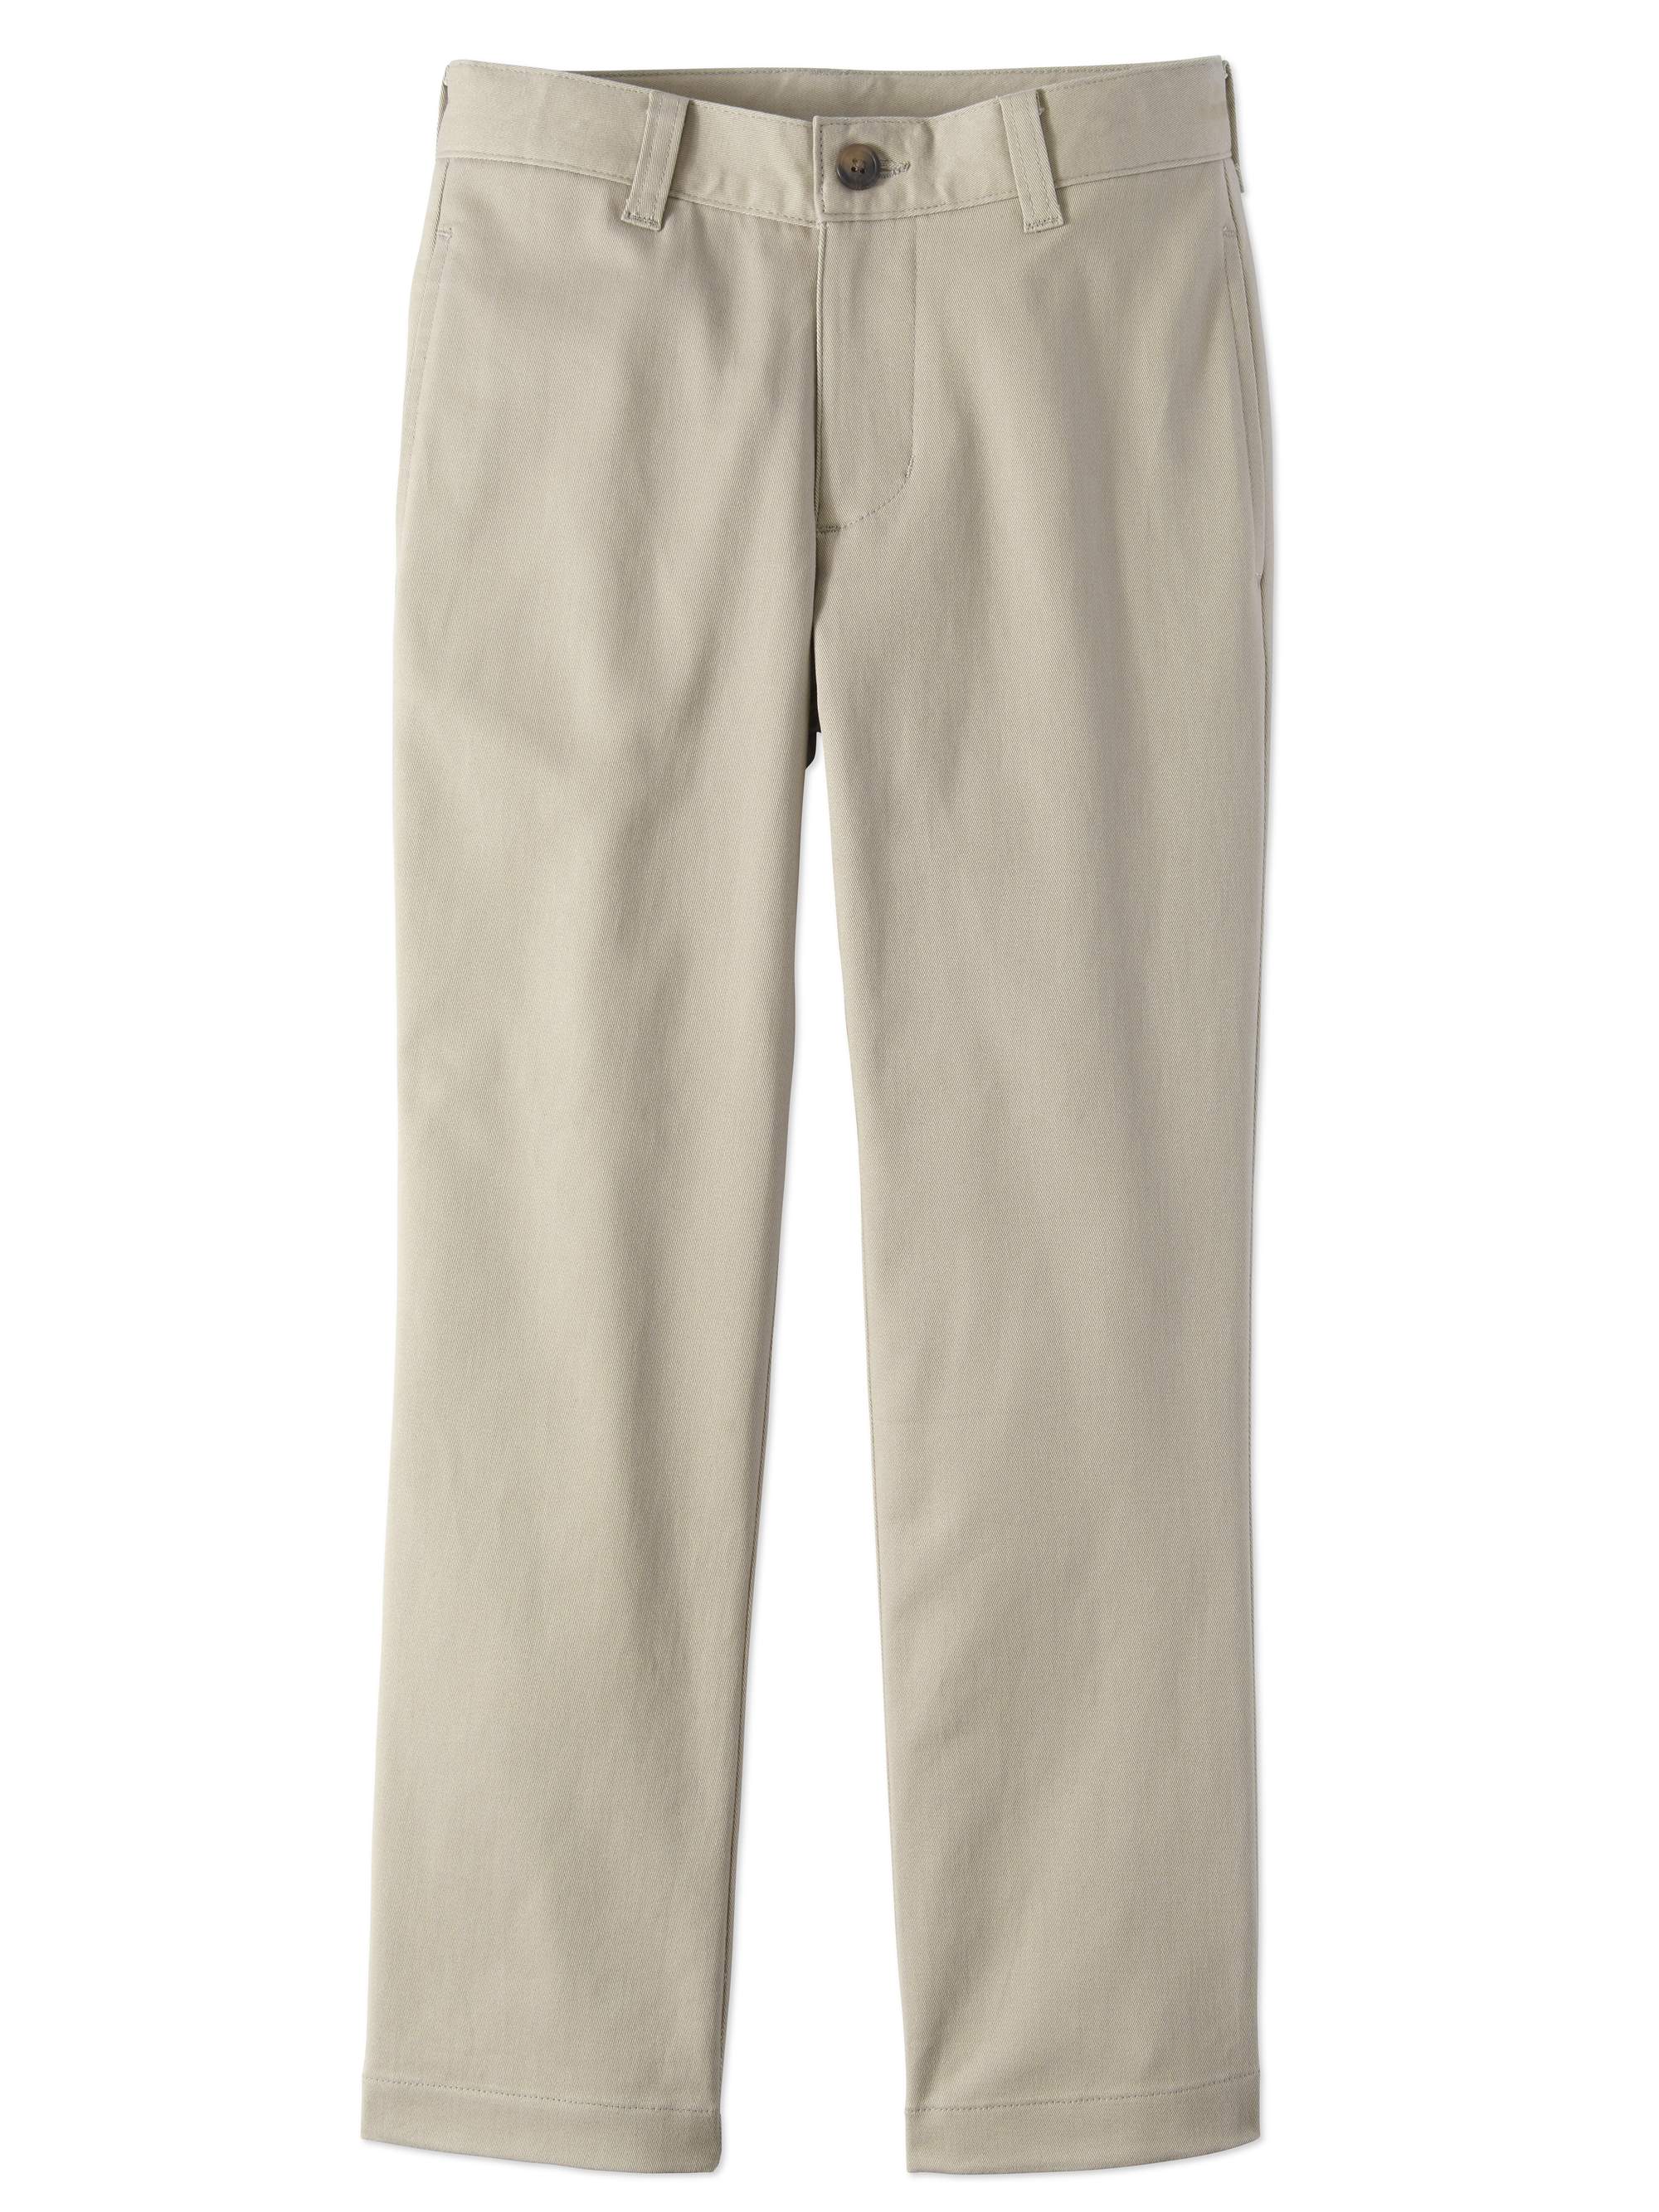 Wonder Nation Boys School Uniform Super Soft Stretch Twill Flat Front Pants, Sizes 4-22, Slim, & Husky - image 1 of 4